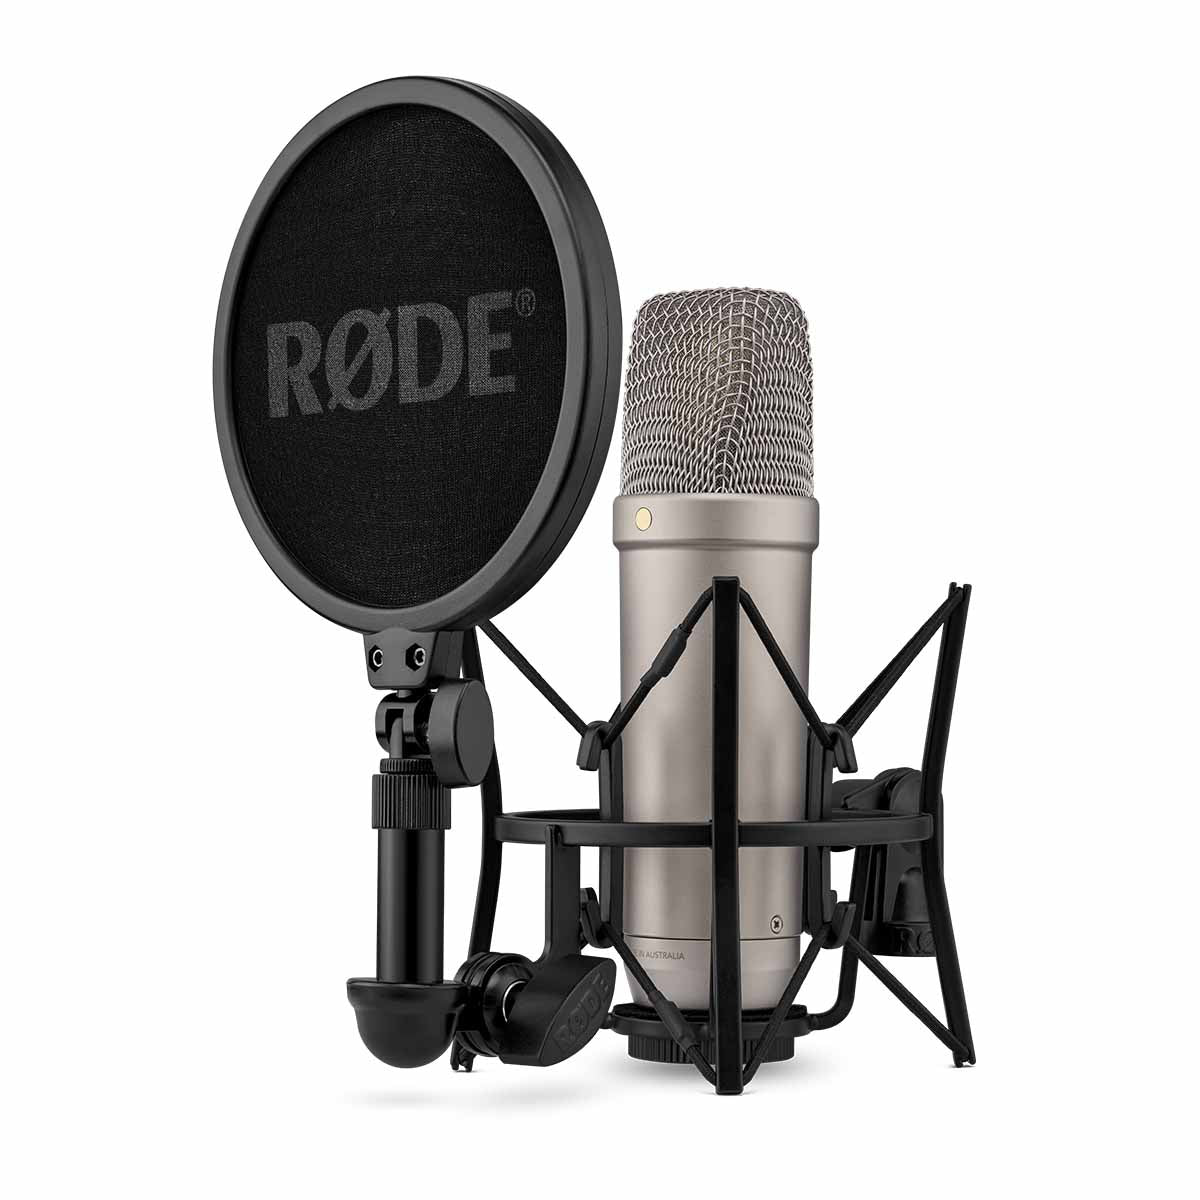 Rode NT1 5th Gen XLR & USB Microphone (Silver)